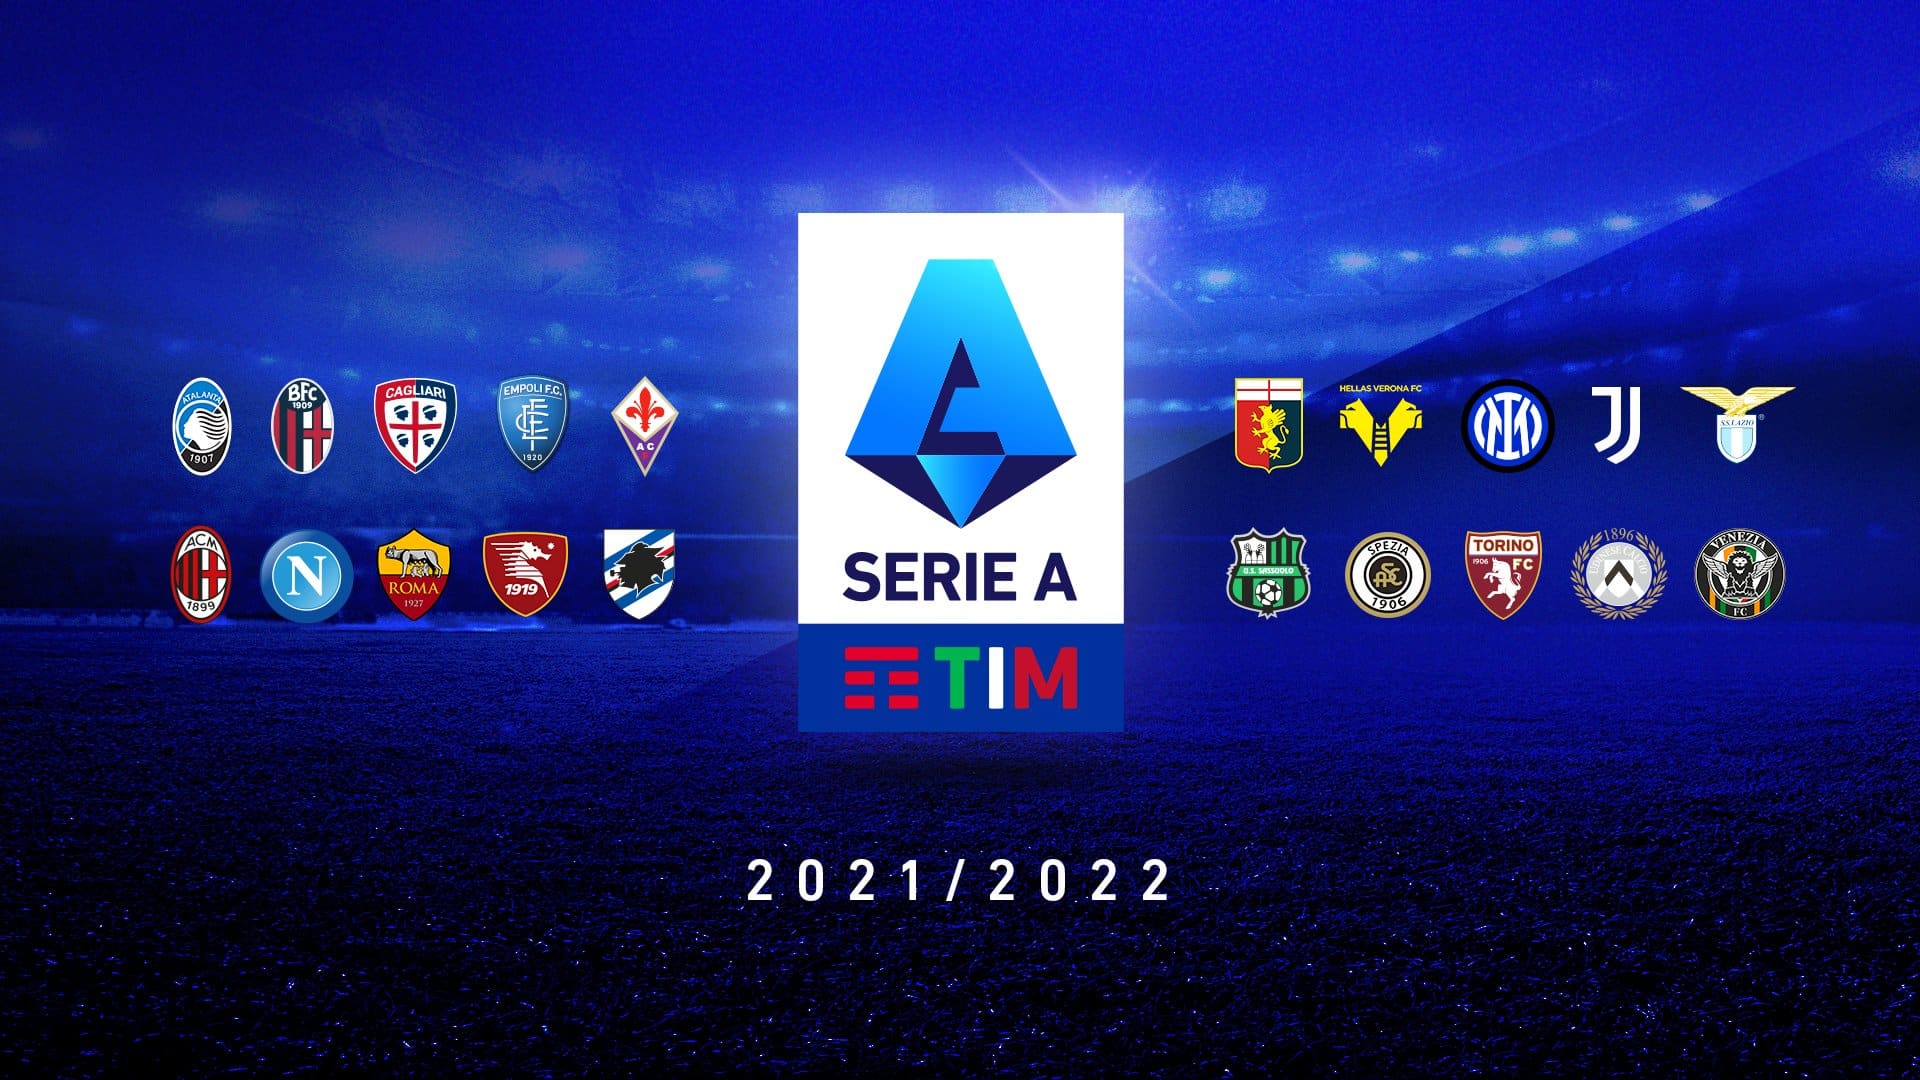 Lazio – Juventus (Pick, Prediction, Preview) Preview